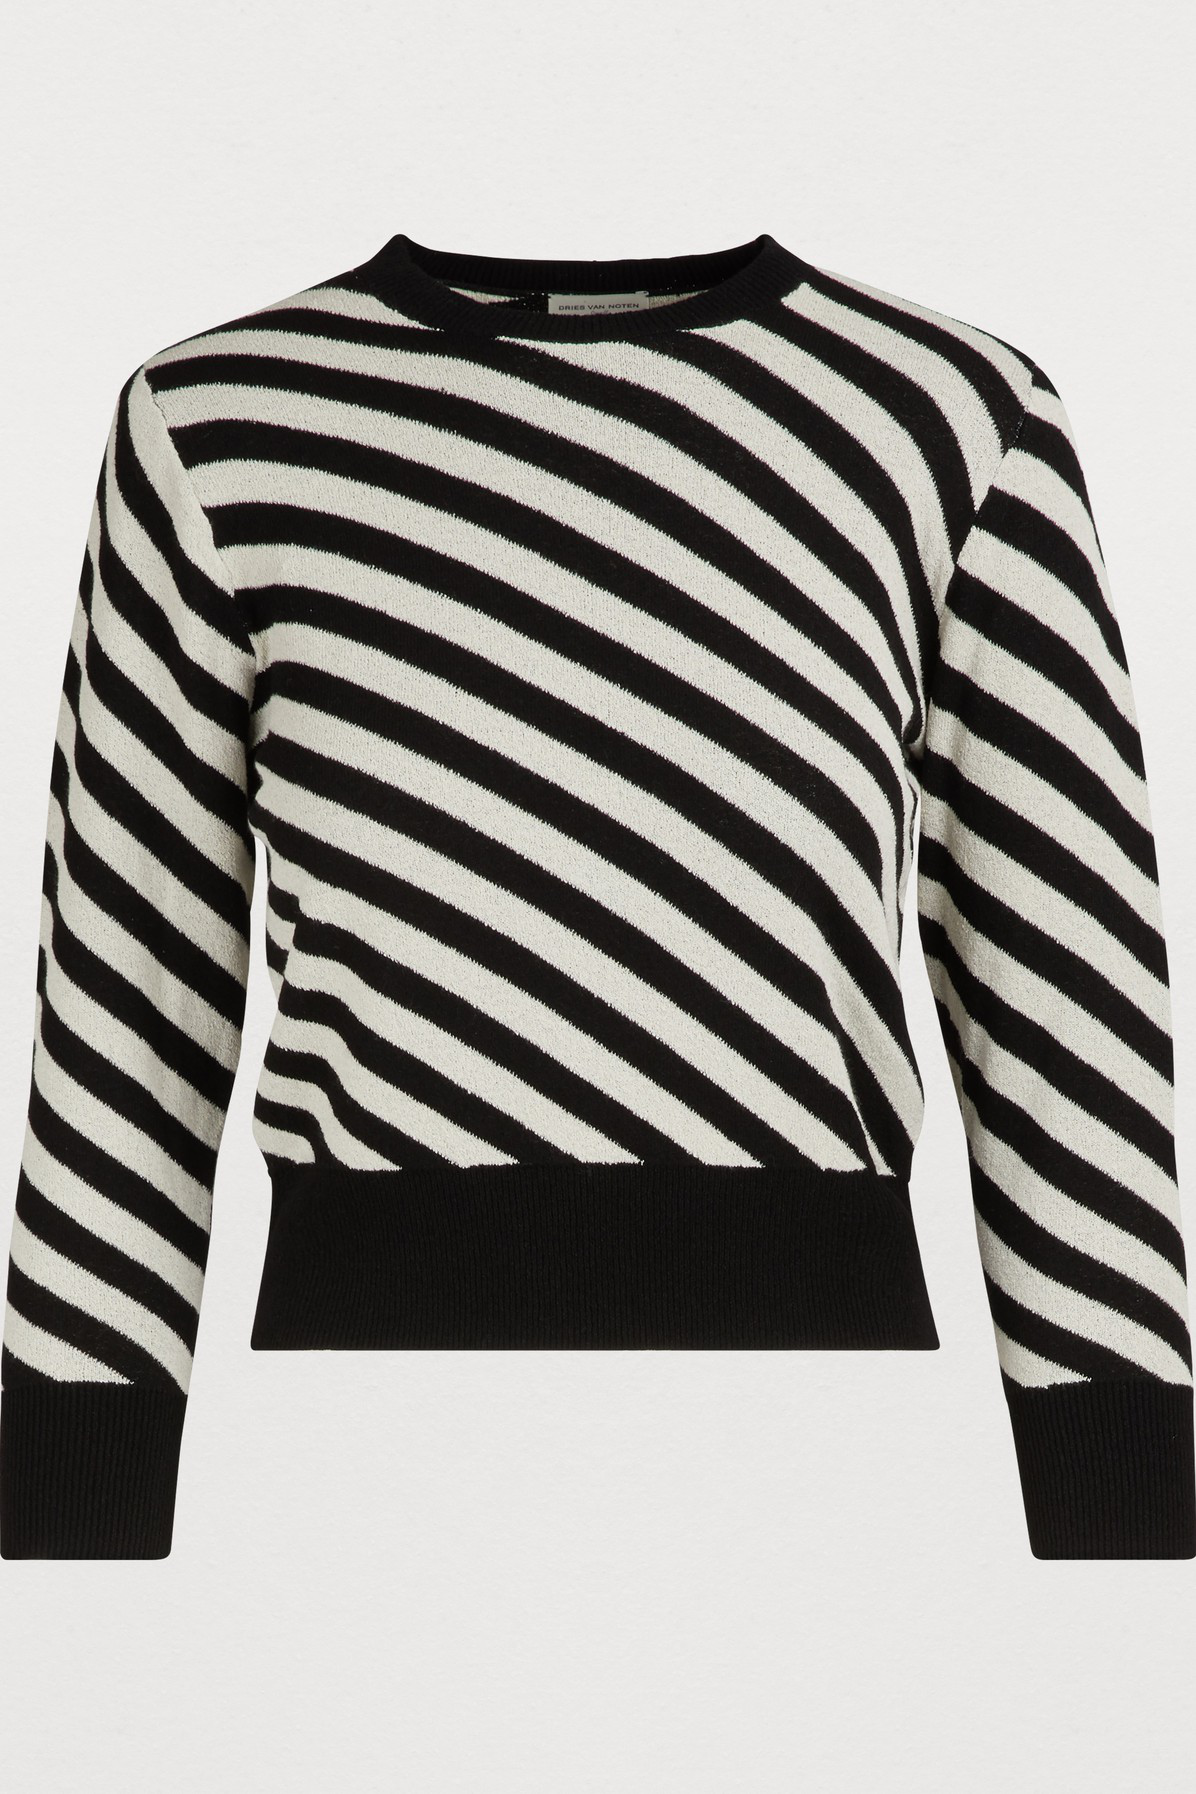 Dries Van Noten Striped Sweater In Black | ModeSens